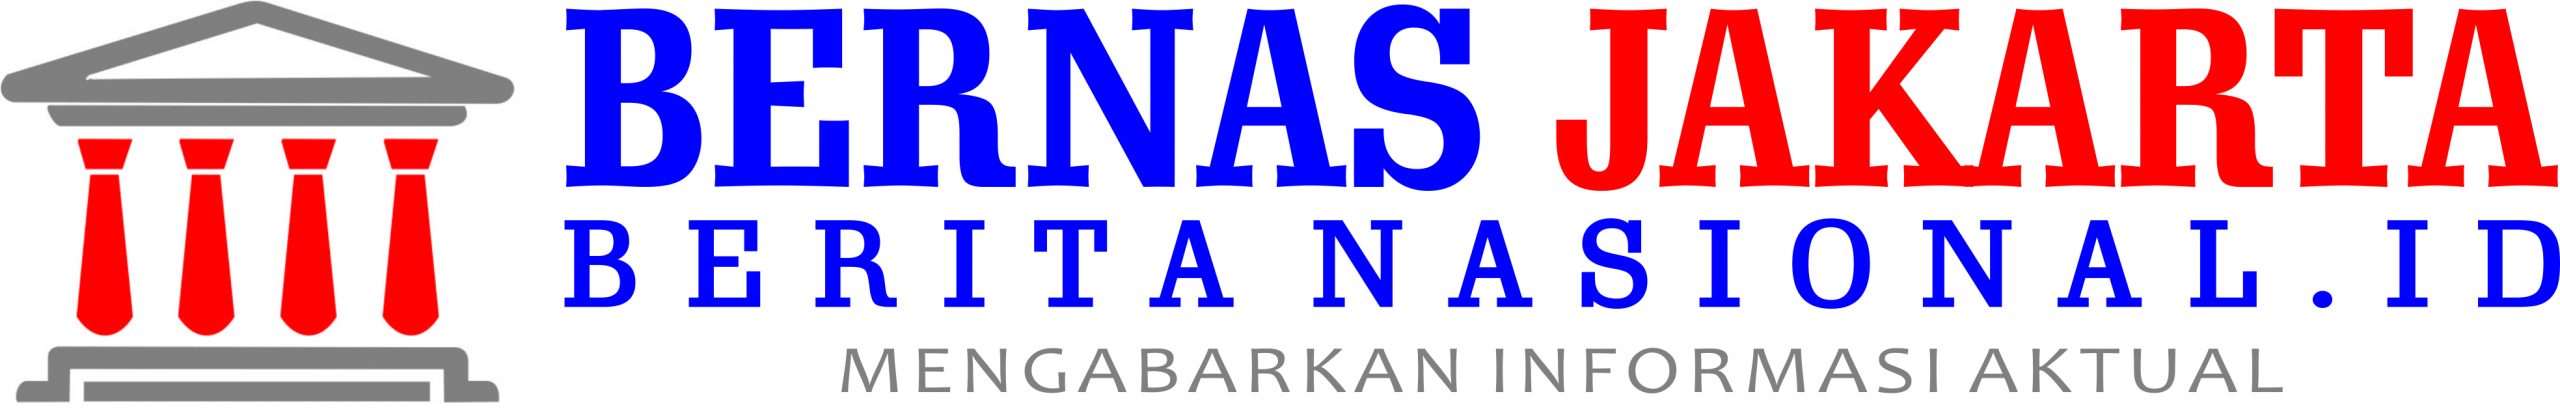 Berita Nasional Jakarta